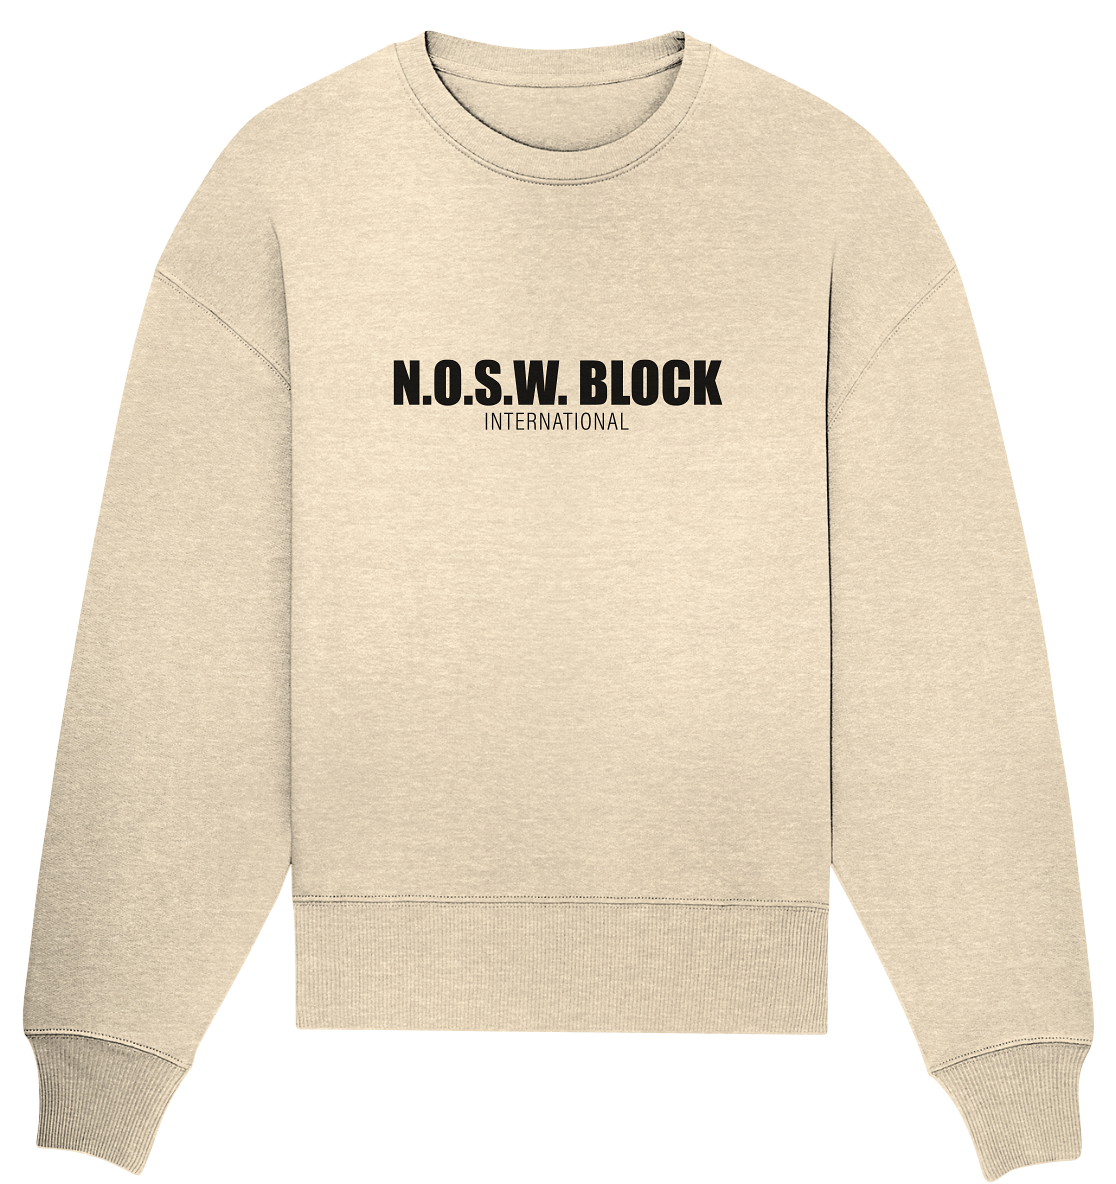 N.O.S.W. BLOCK Sweater "N.O.S.W. BLOCK INTERNATIONAL" Frauen Organic Oversize Sweatshirt natural raw